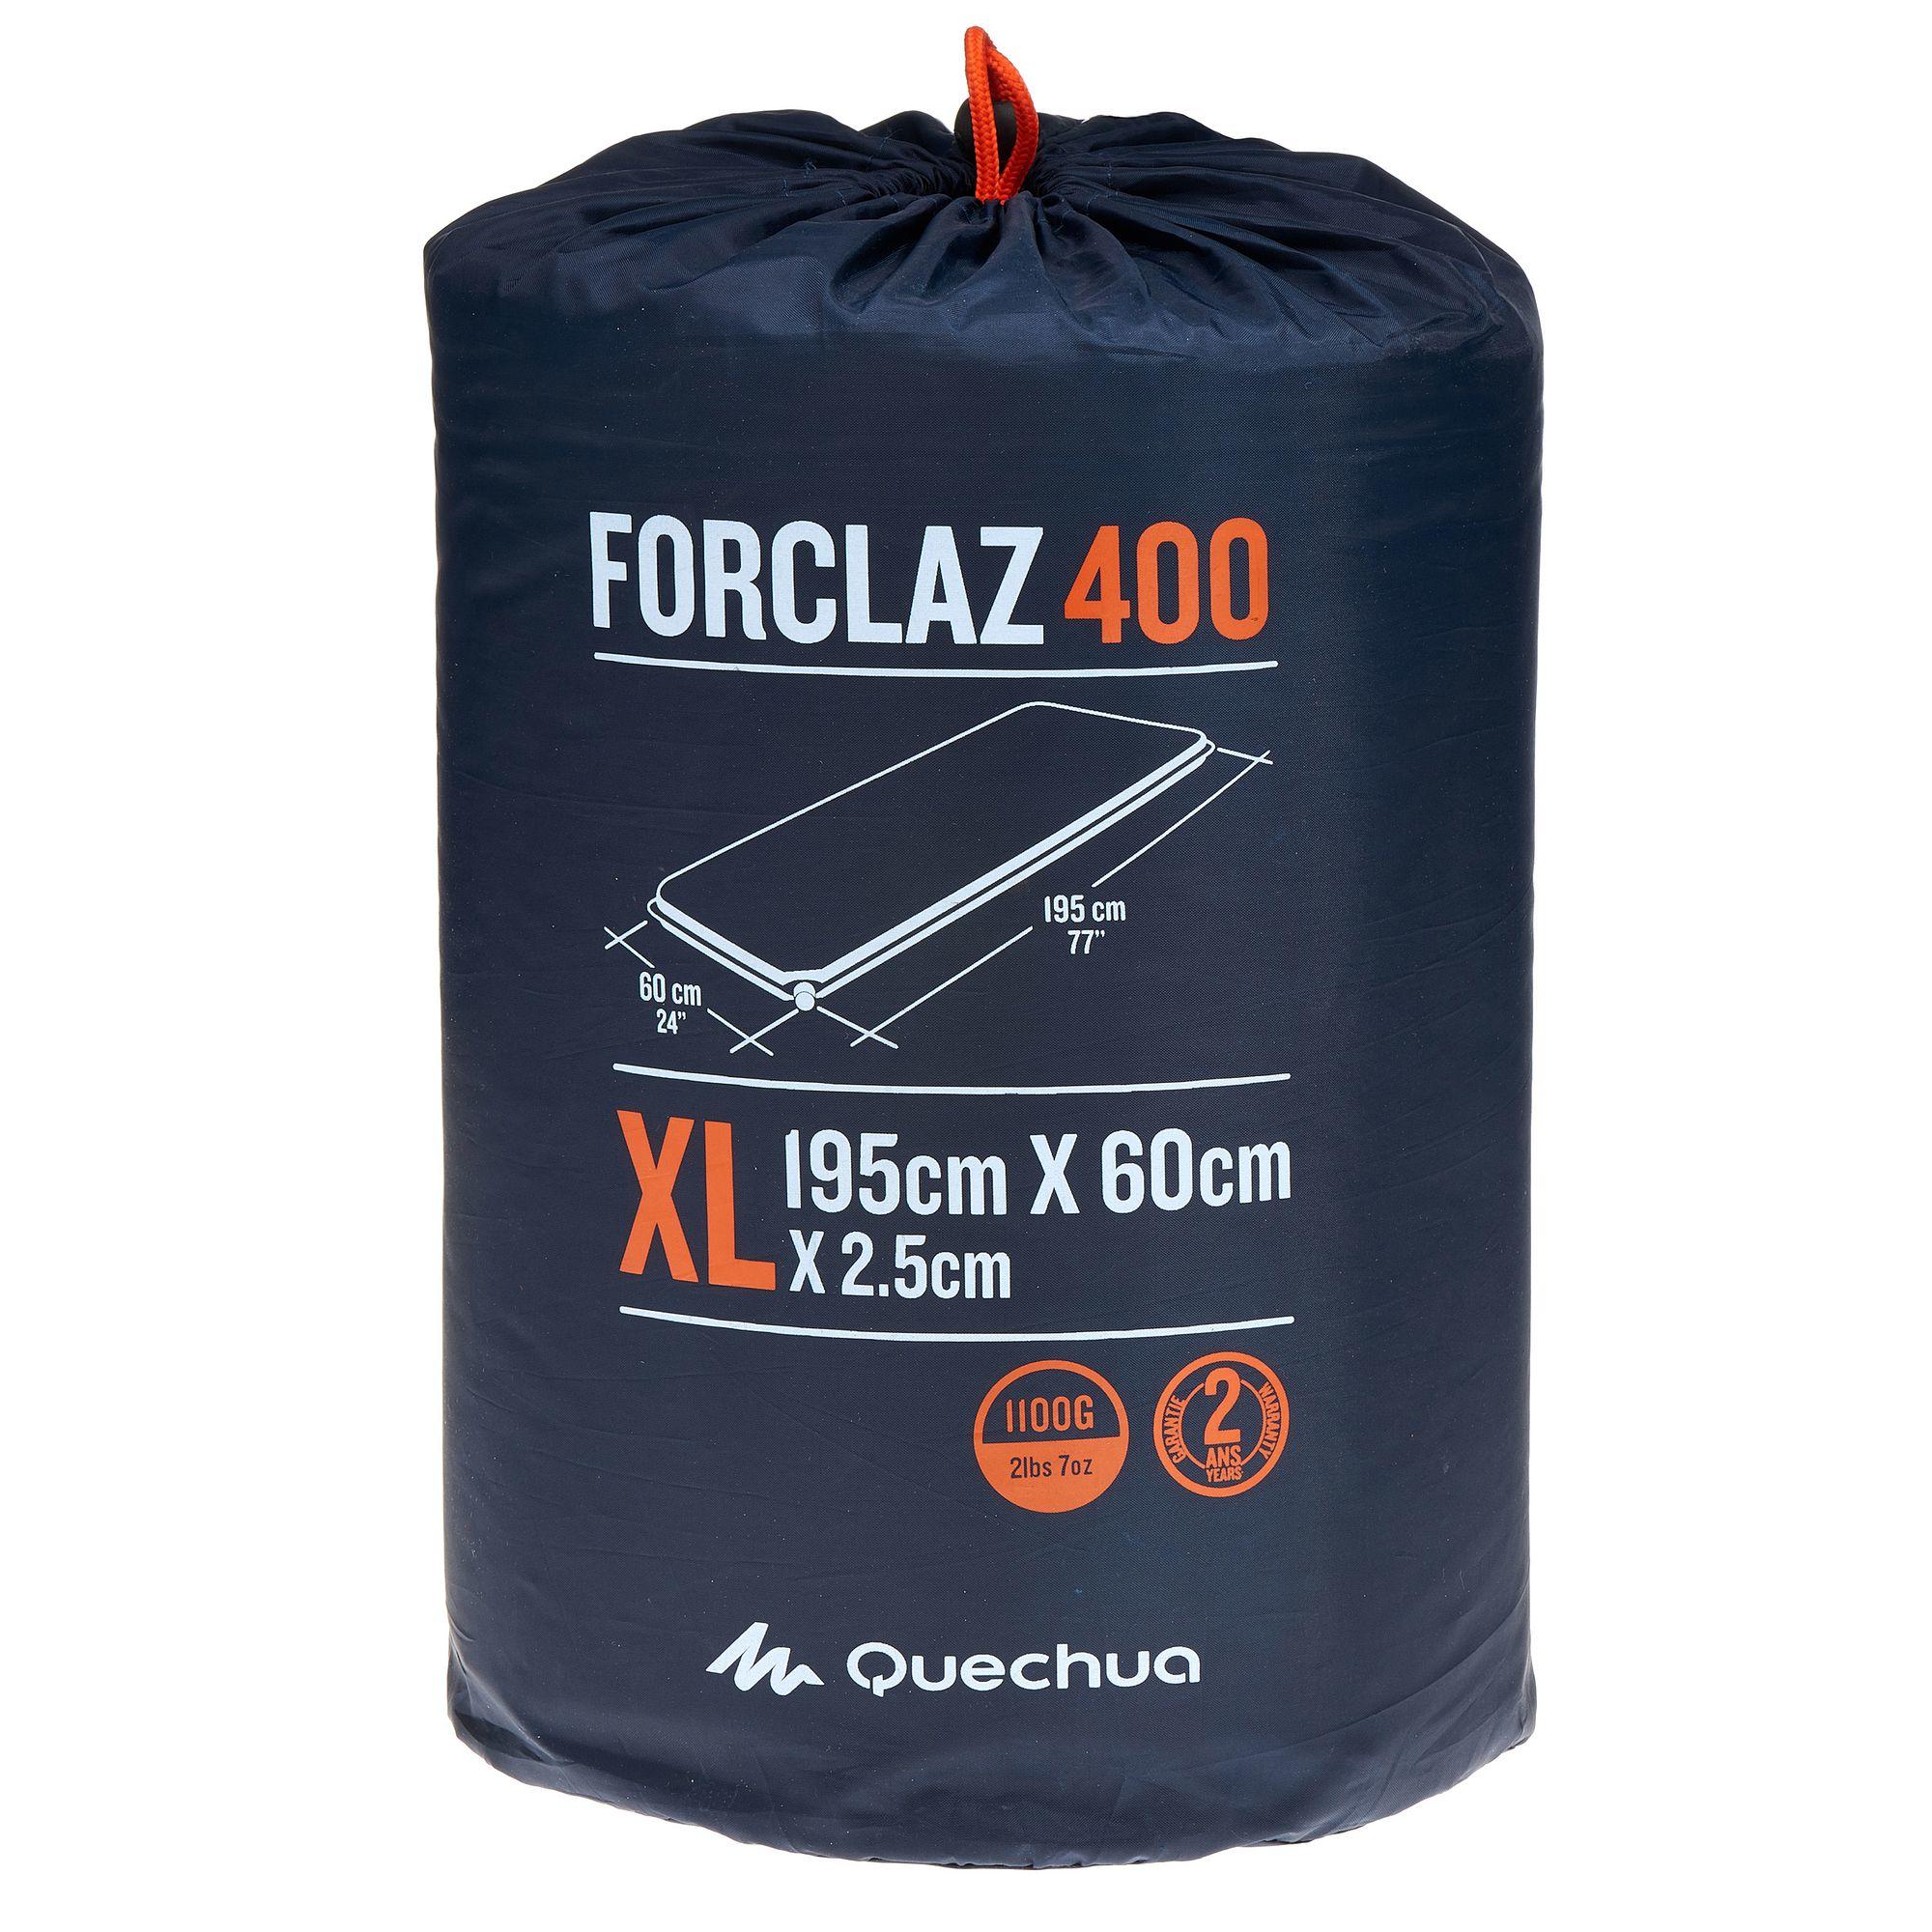 Forclaz 400 XL Self-inflating Hiking 